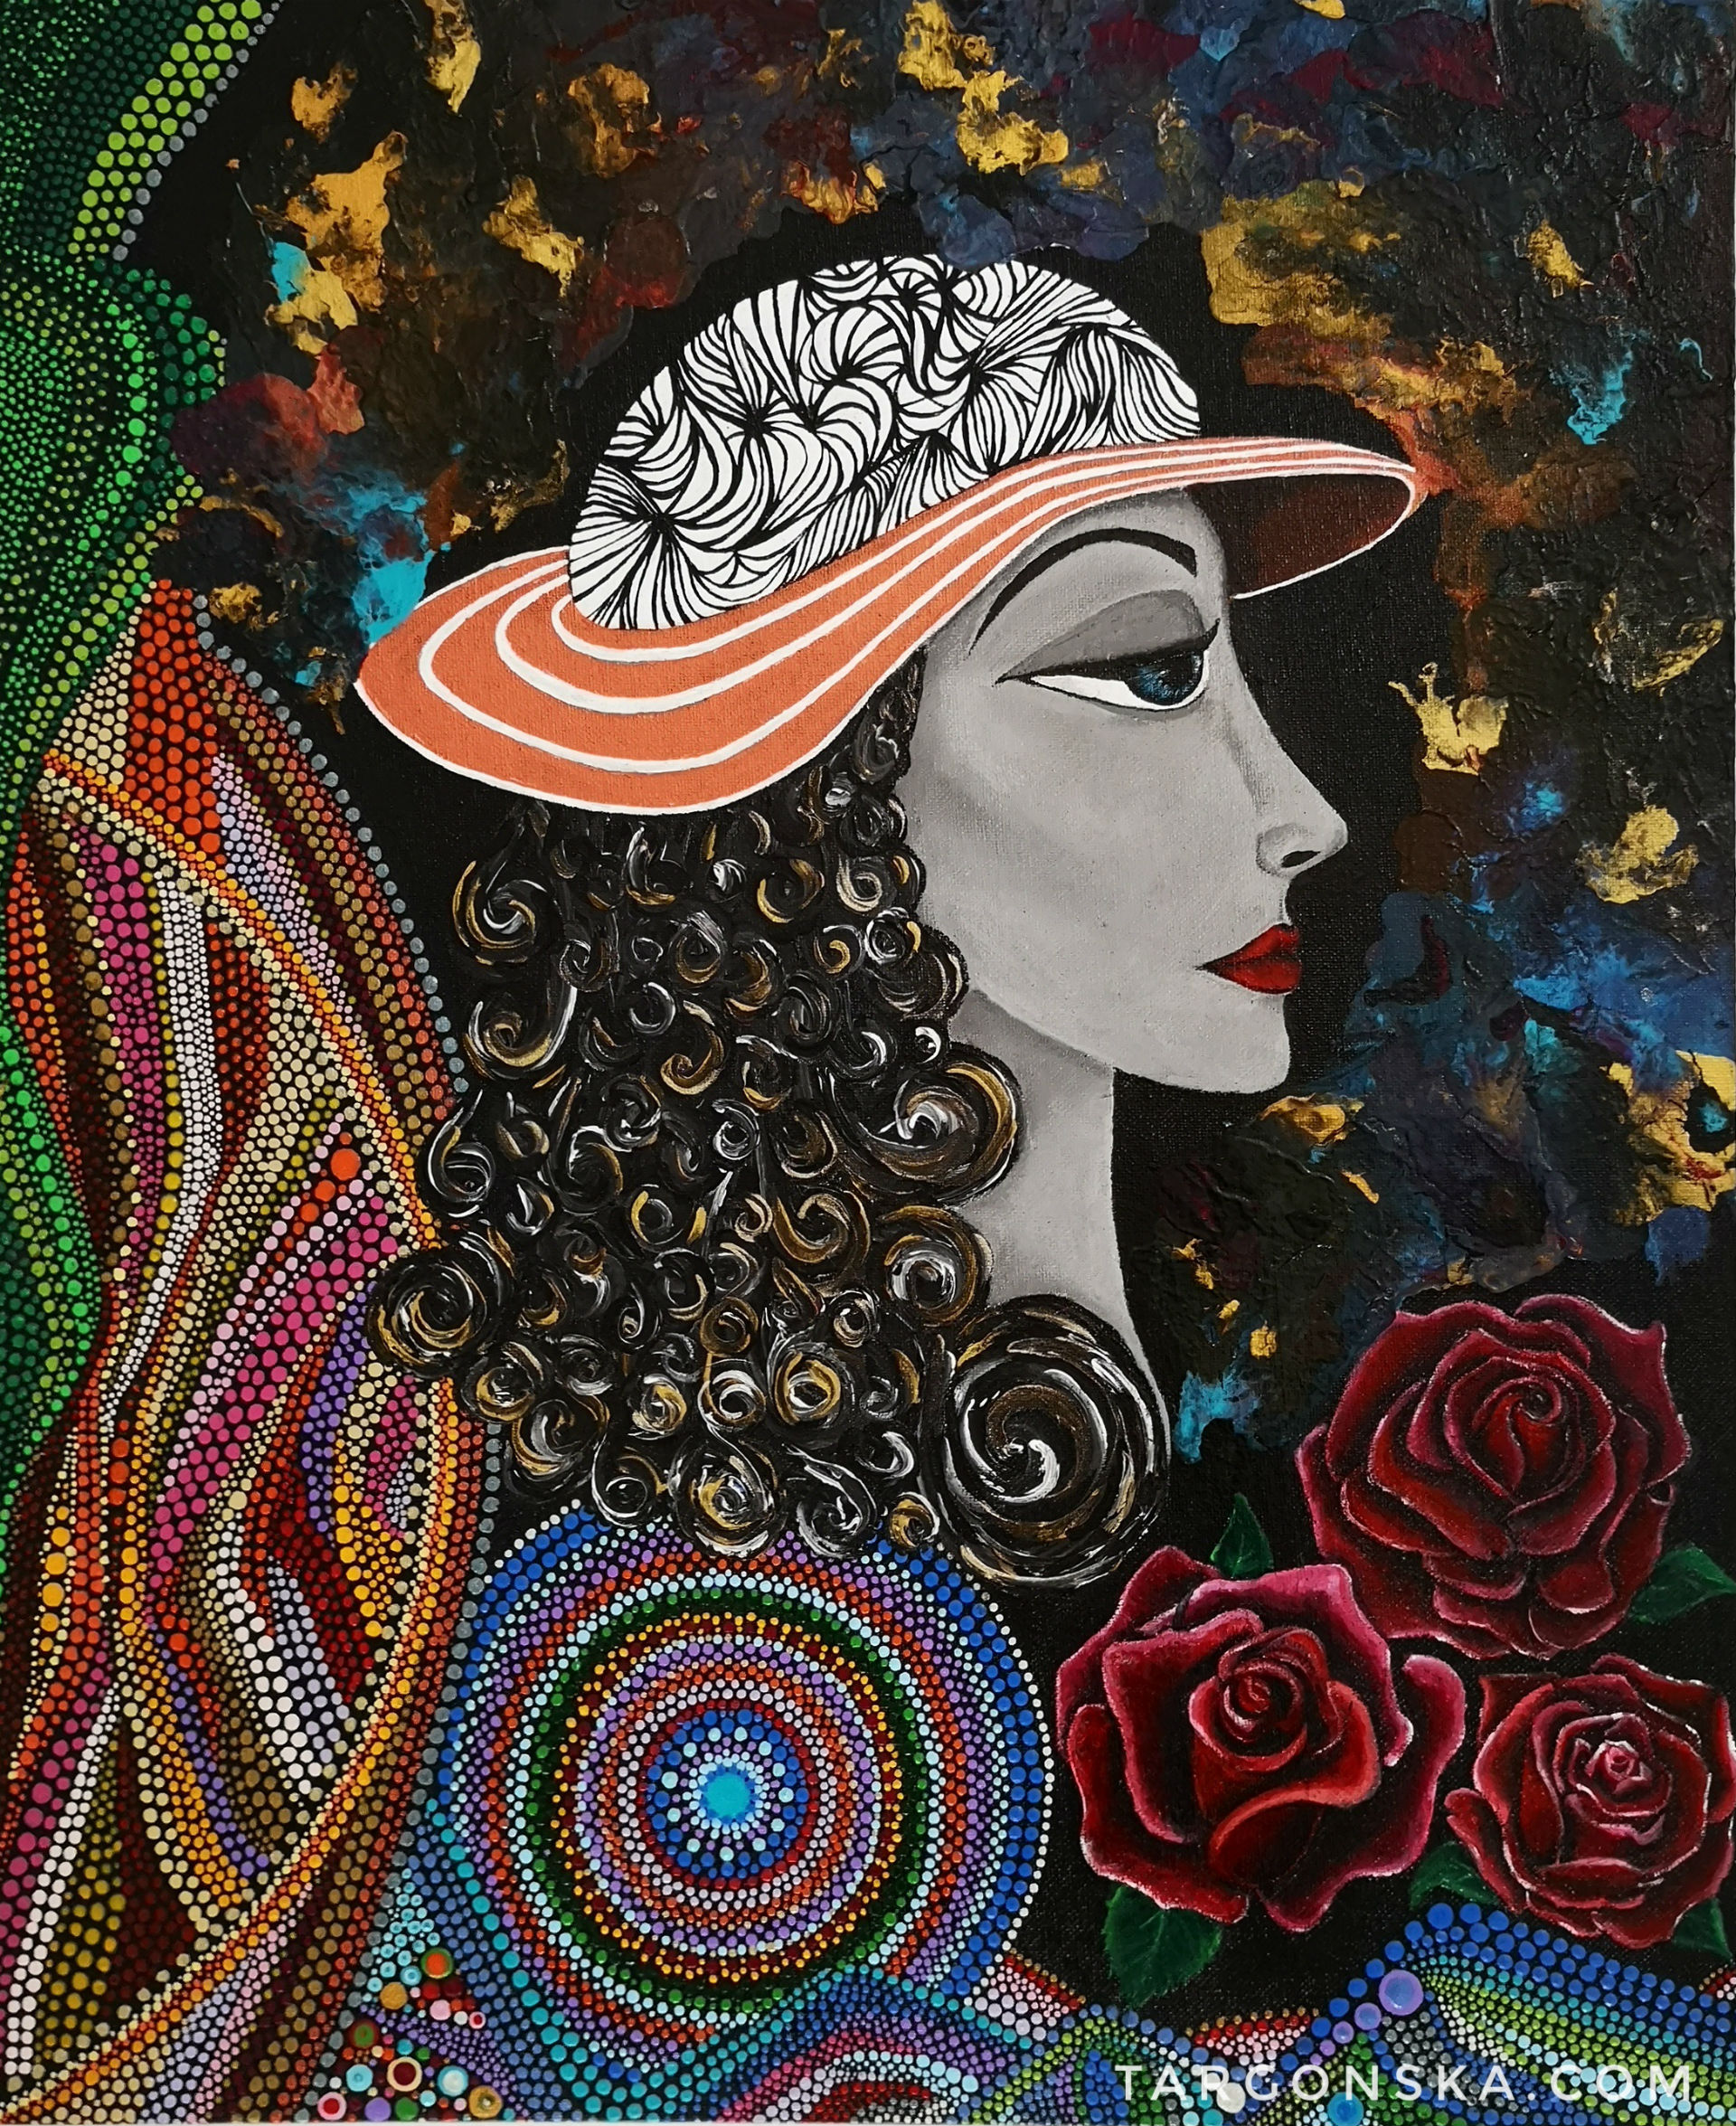 Targonska lady in a hat